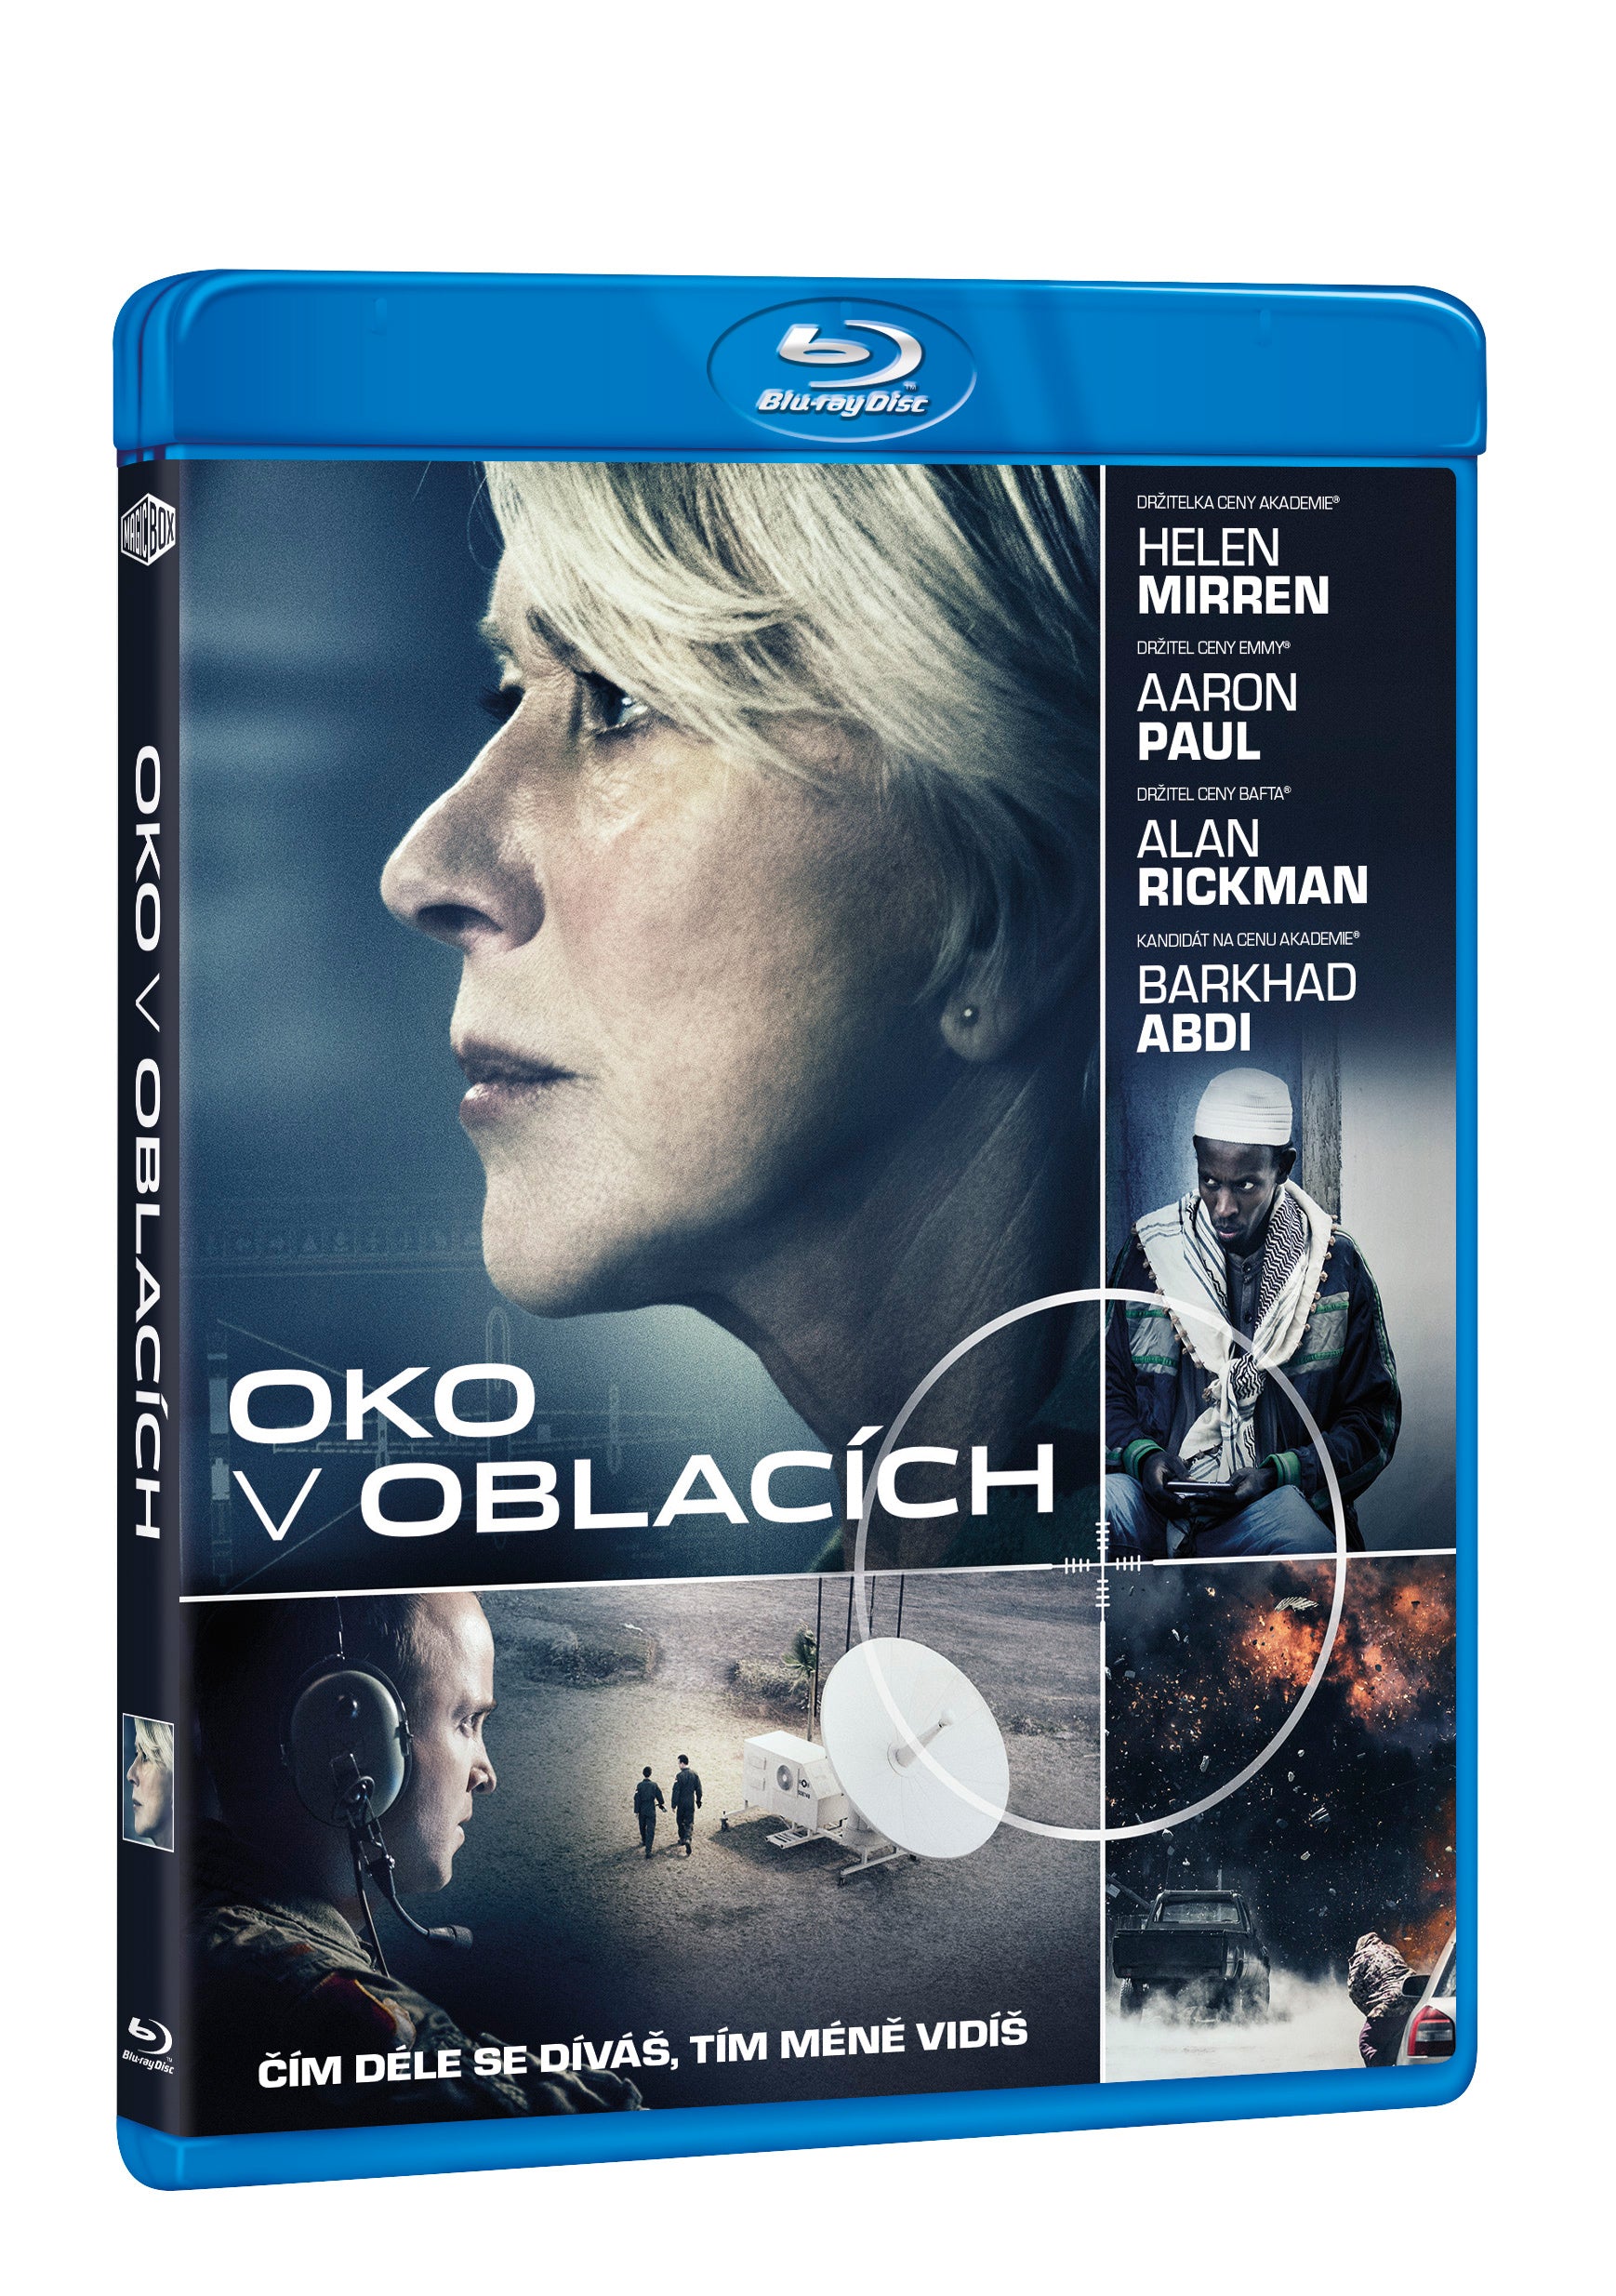 Oko v oblacich BD / Eye in the Sky - Czech version